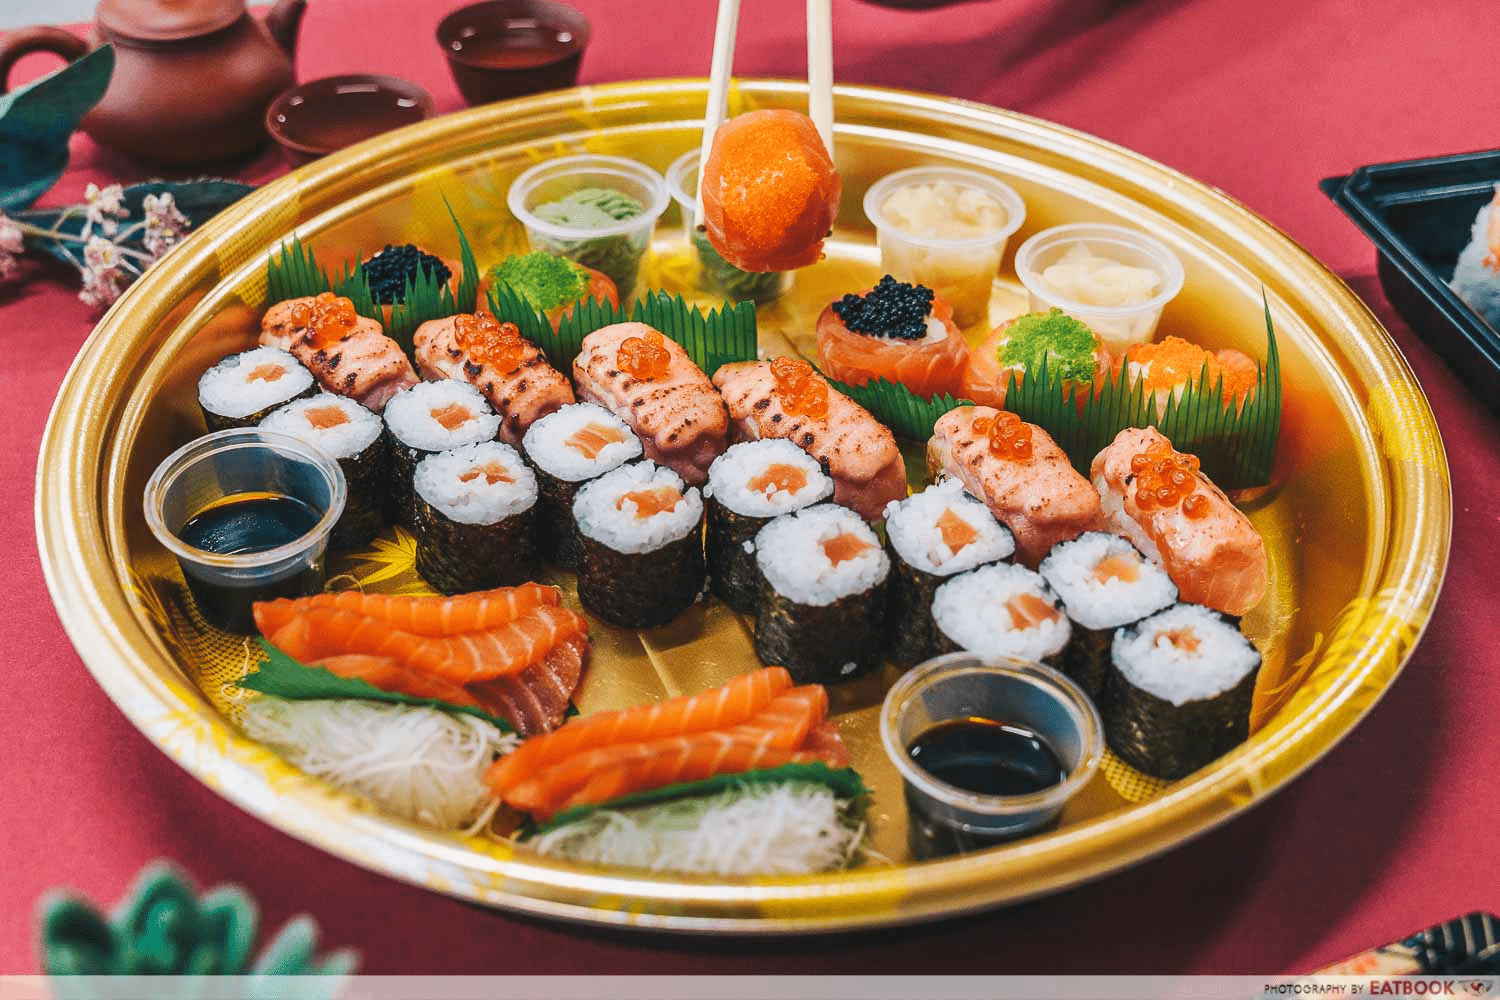 DBS POSB dining deals - sushi platter